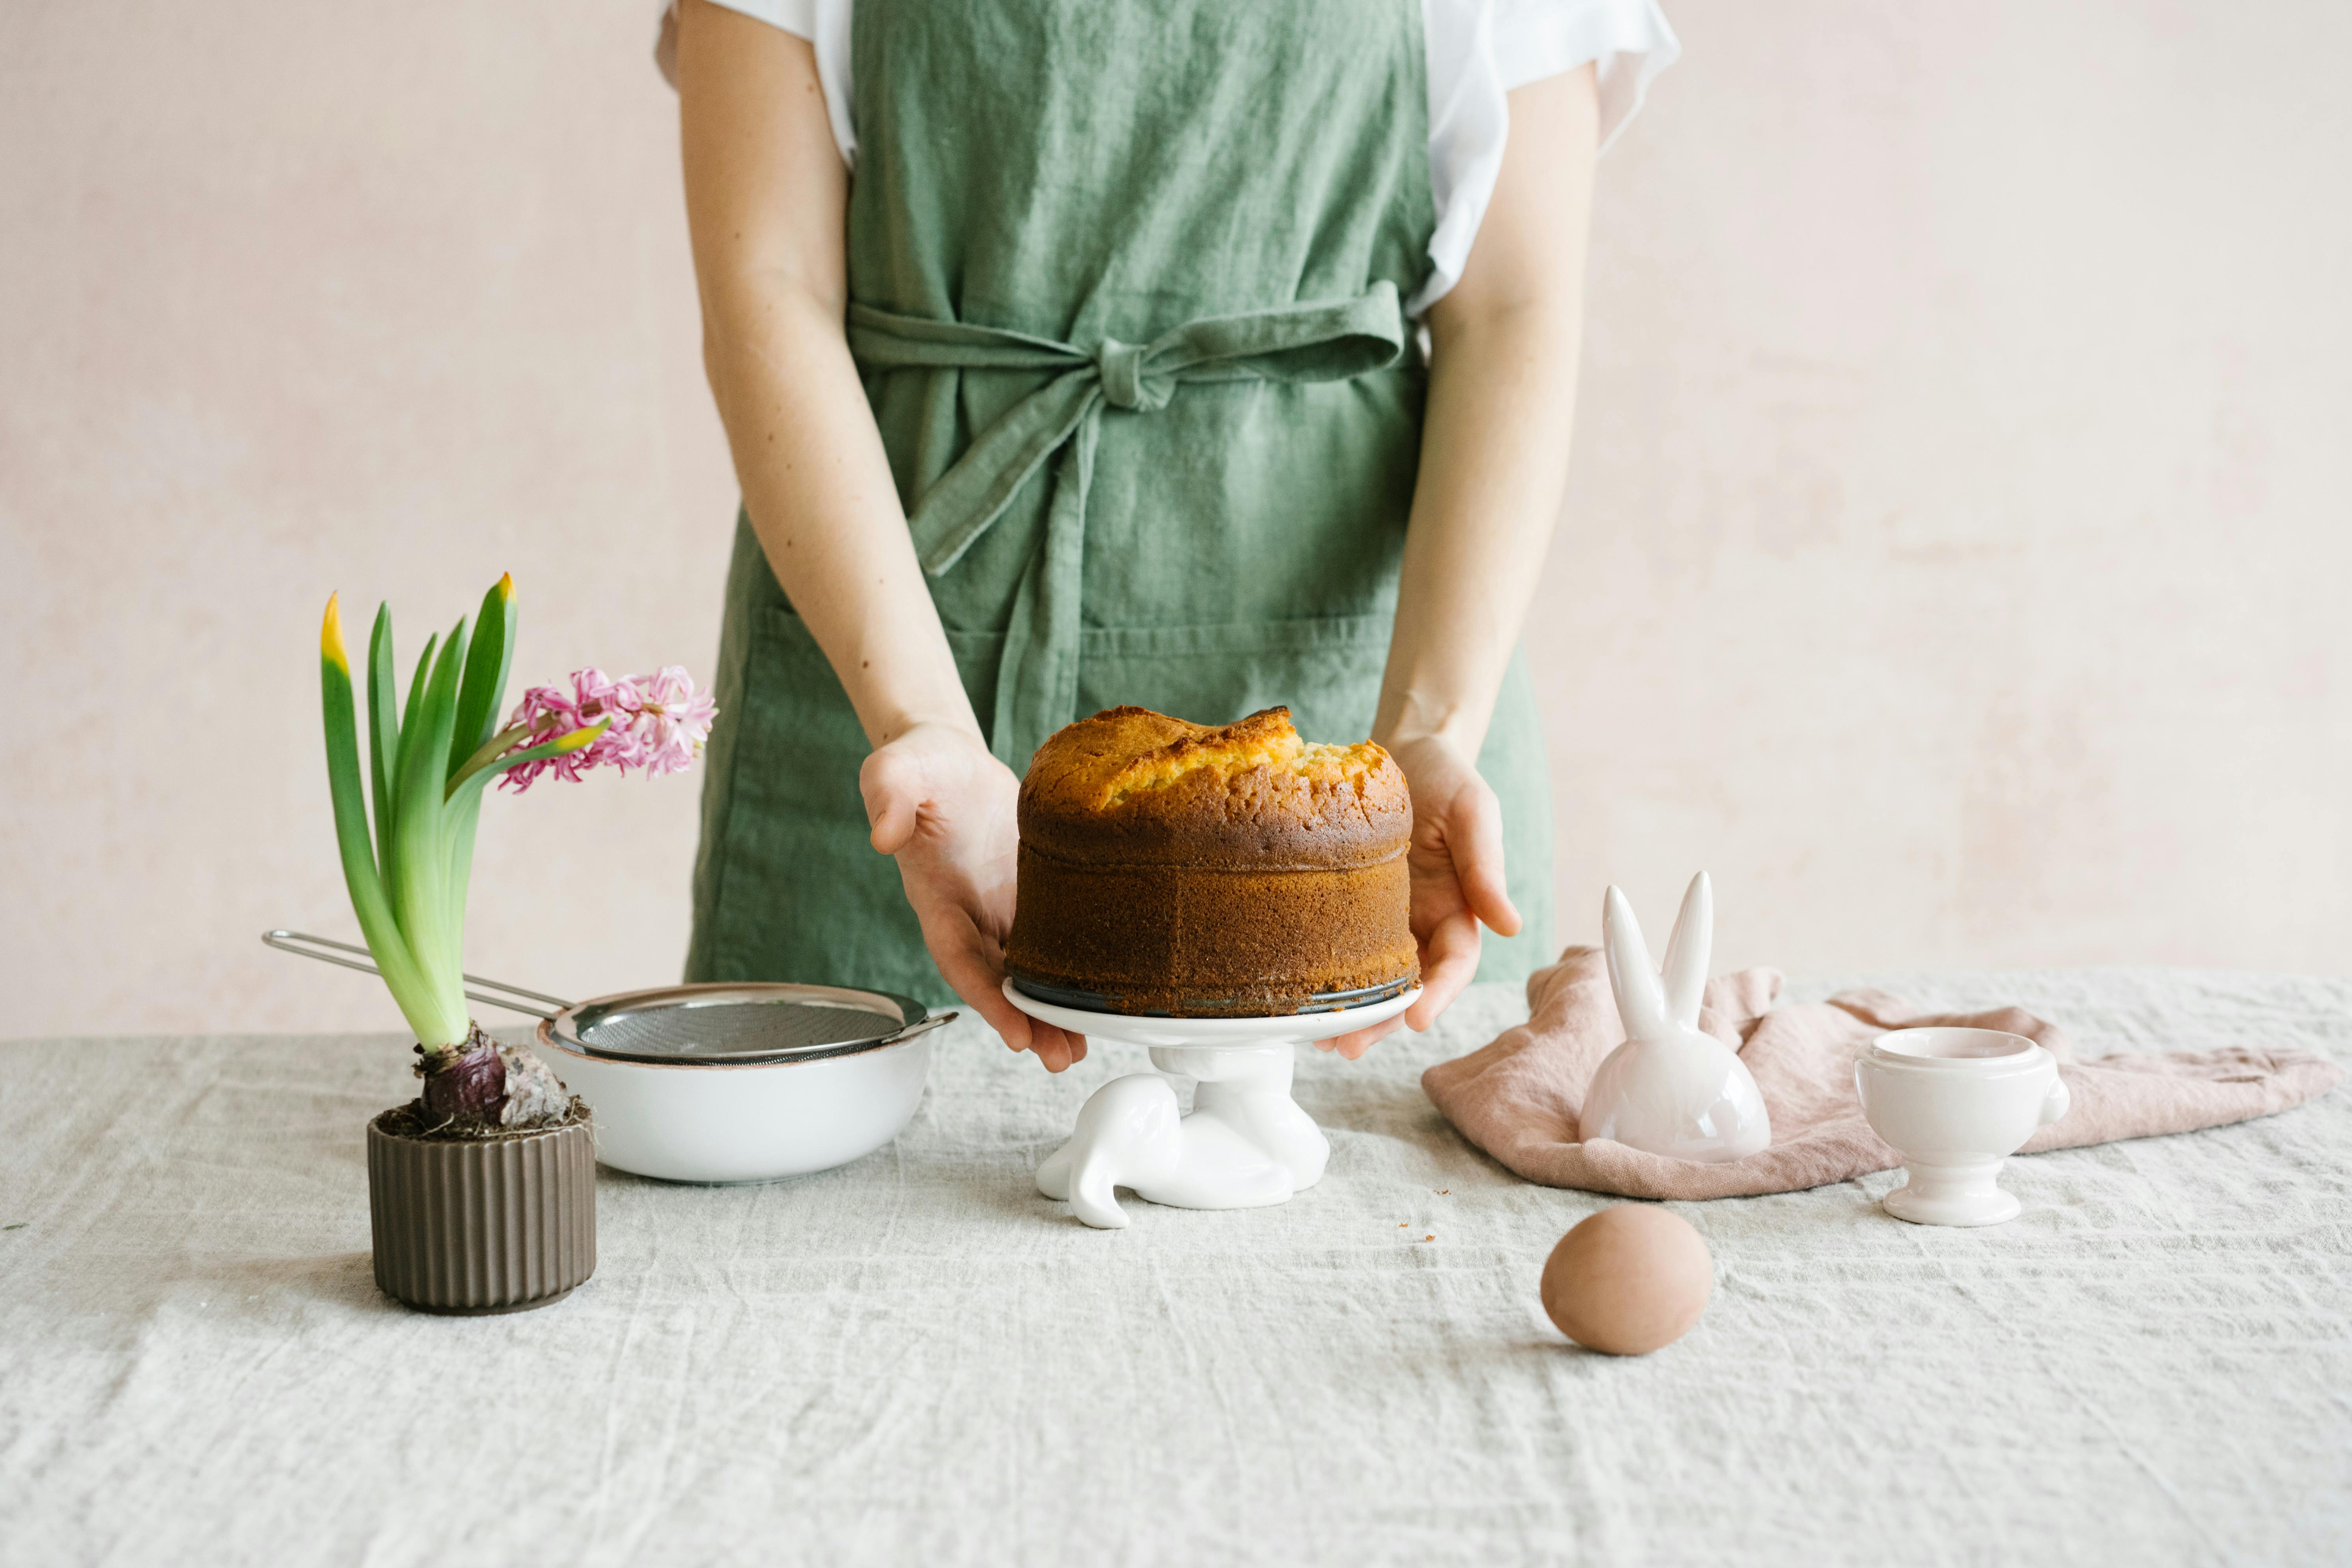 Femme présentant sa tarte | Source : Pexels